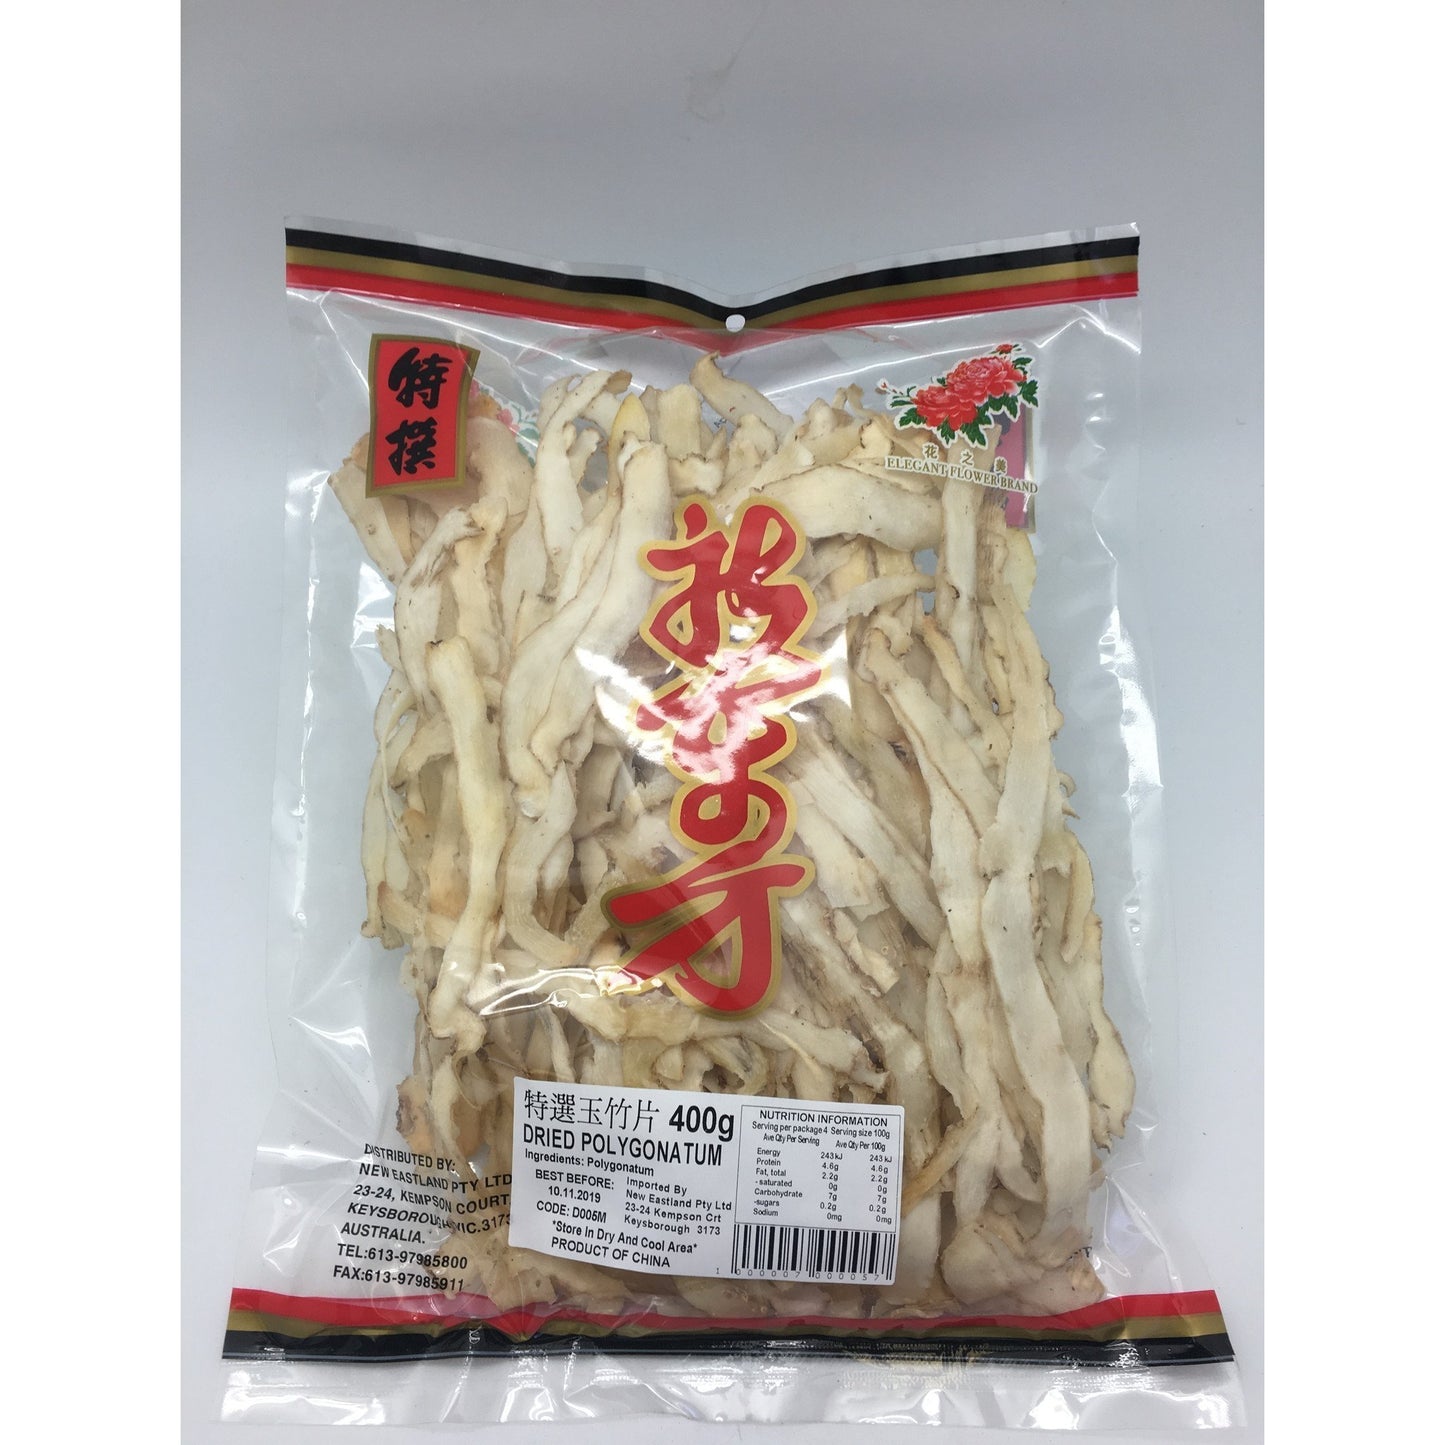 D005M New Eastland Pty Ltd - Dried Polygonatum 400g - 25 bags / 1CTN - New Eastland Pty Ltd - Asian food wholesalers